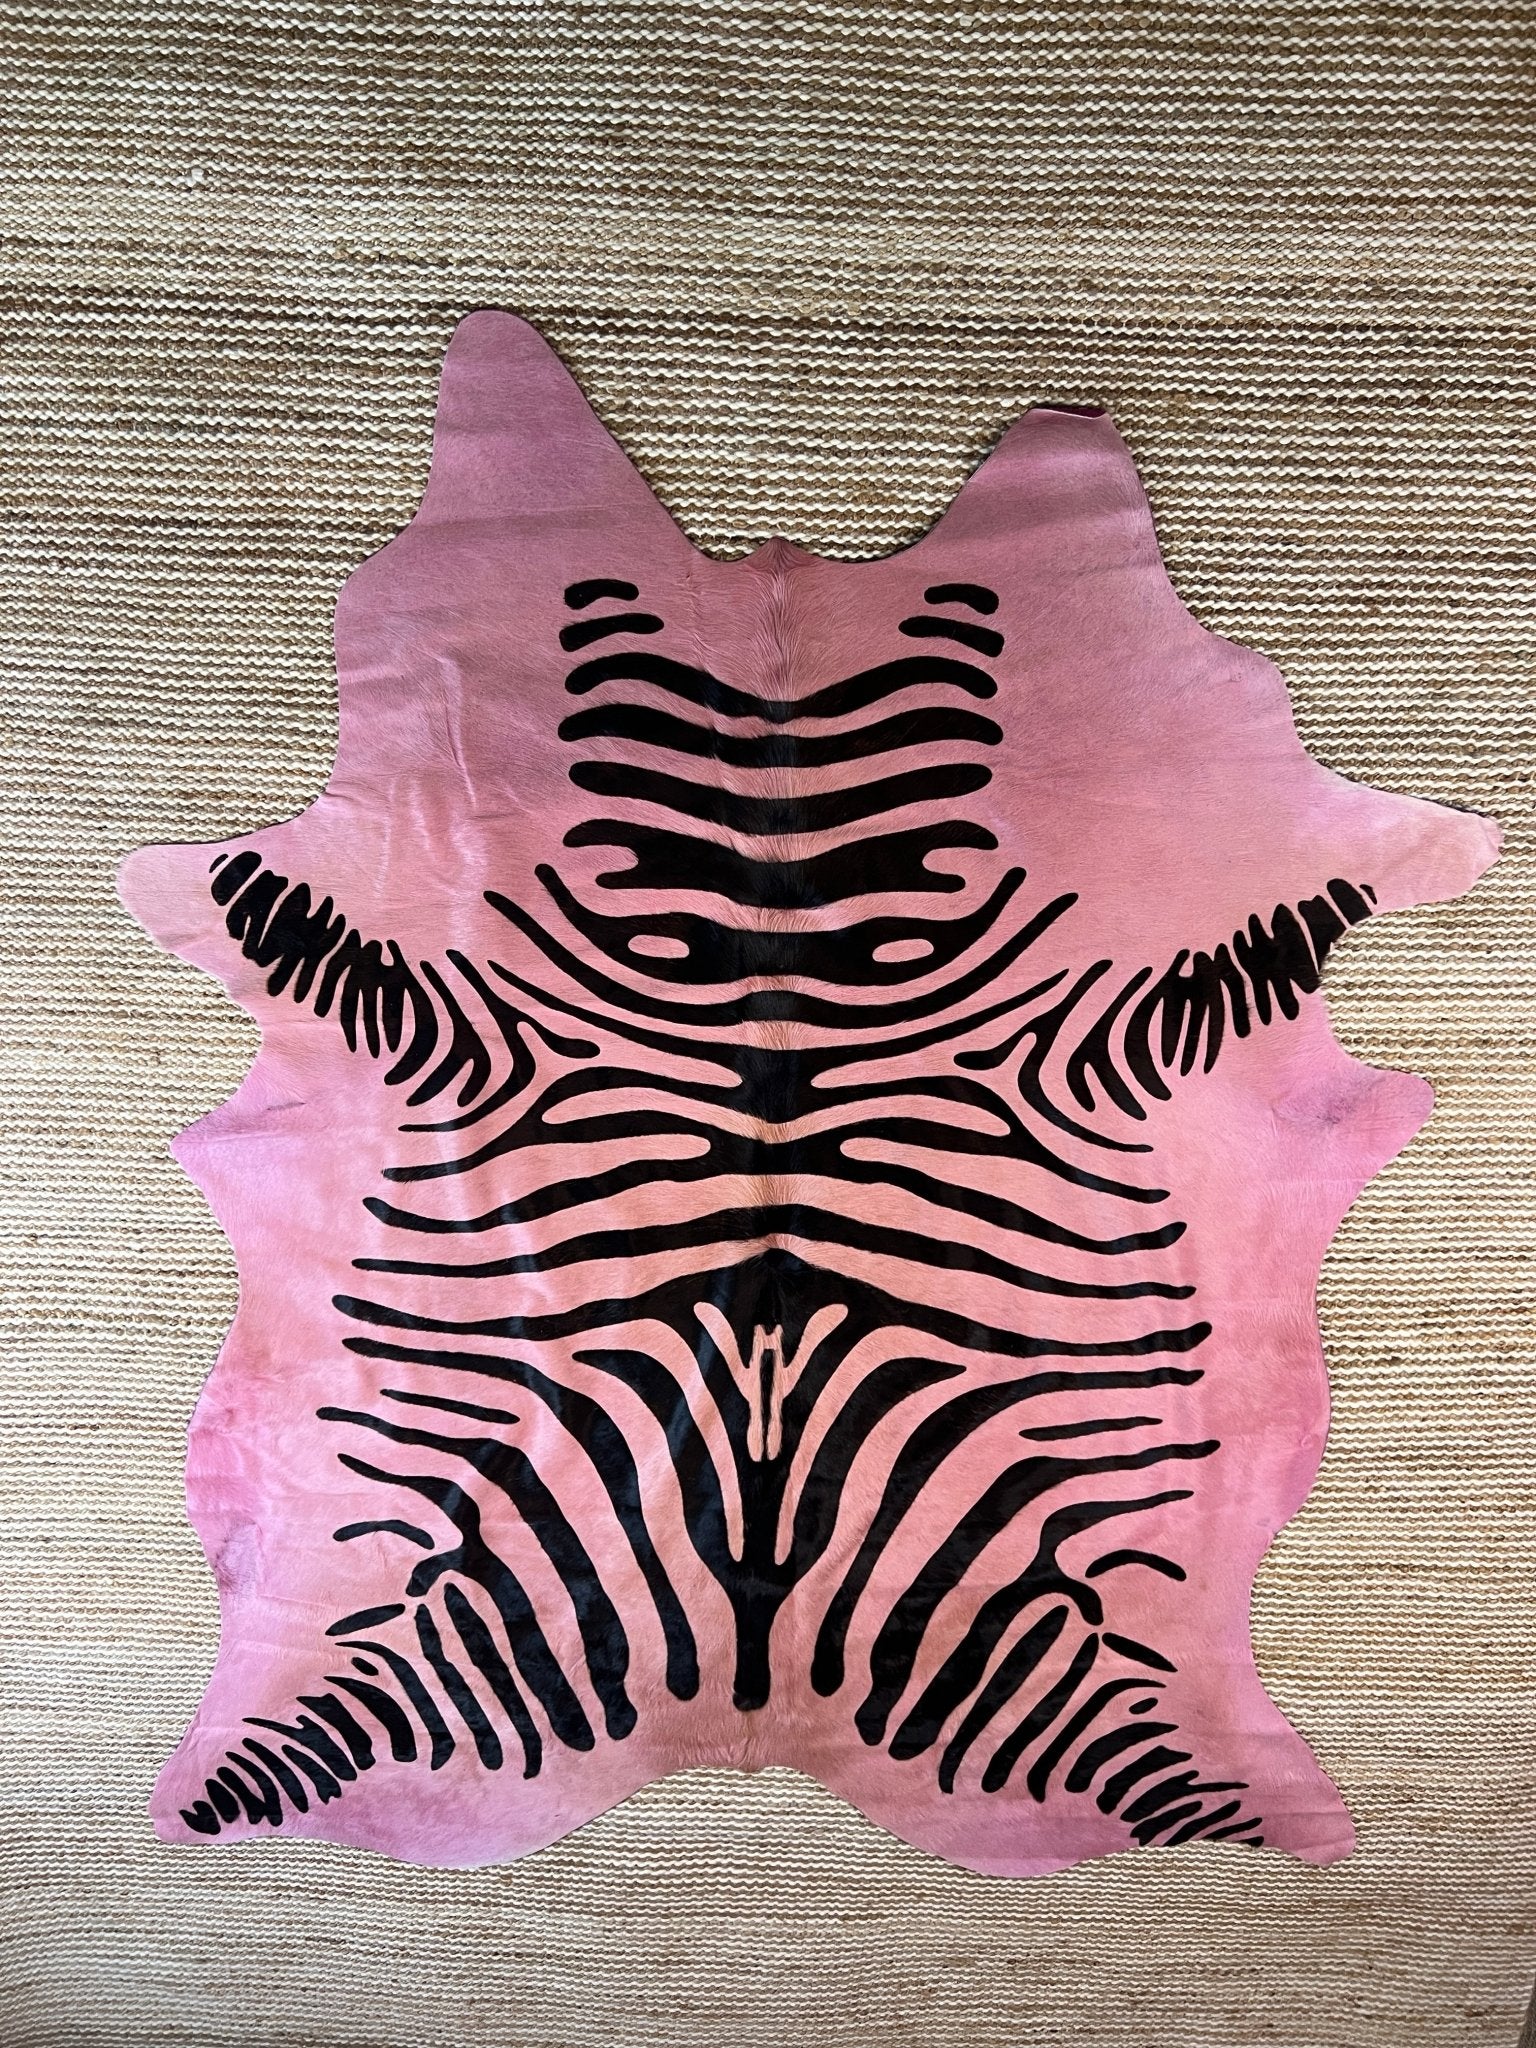 Zebra Pink 6.3x7.2 Medium Cowhide Rug | Banana Manor Rug Factory Outlet